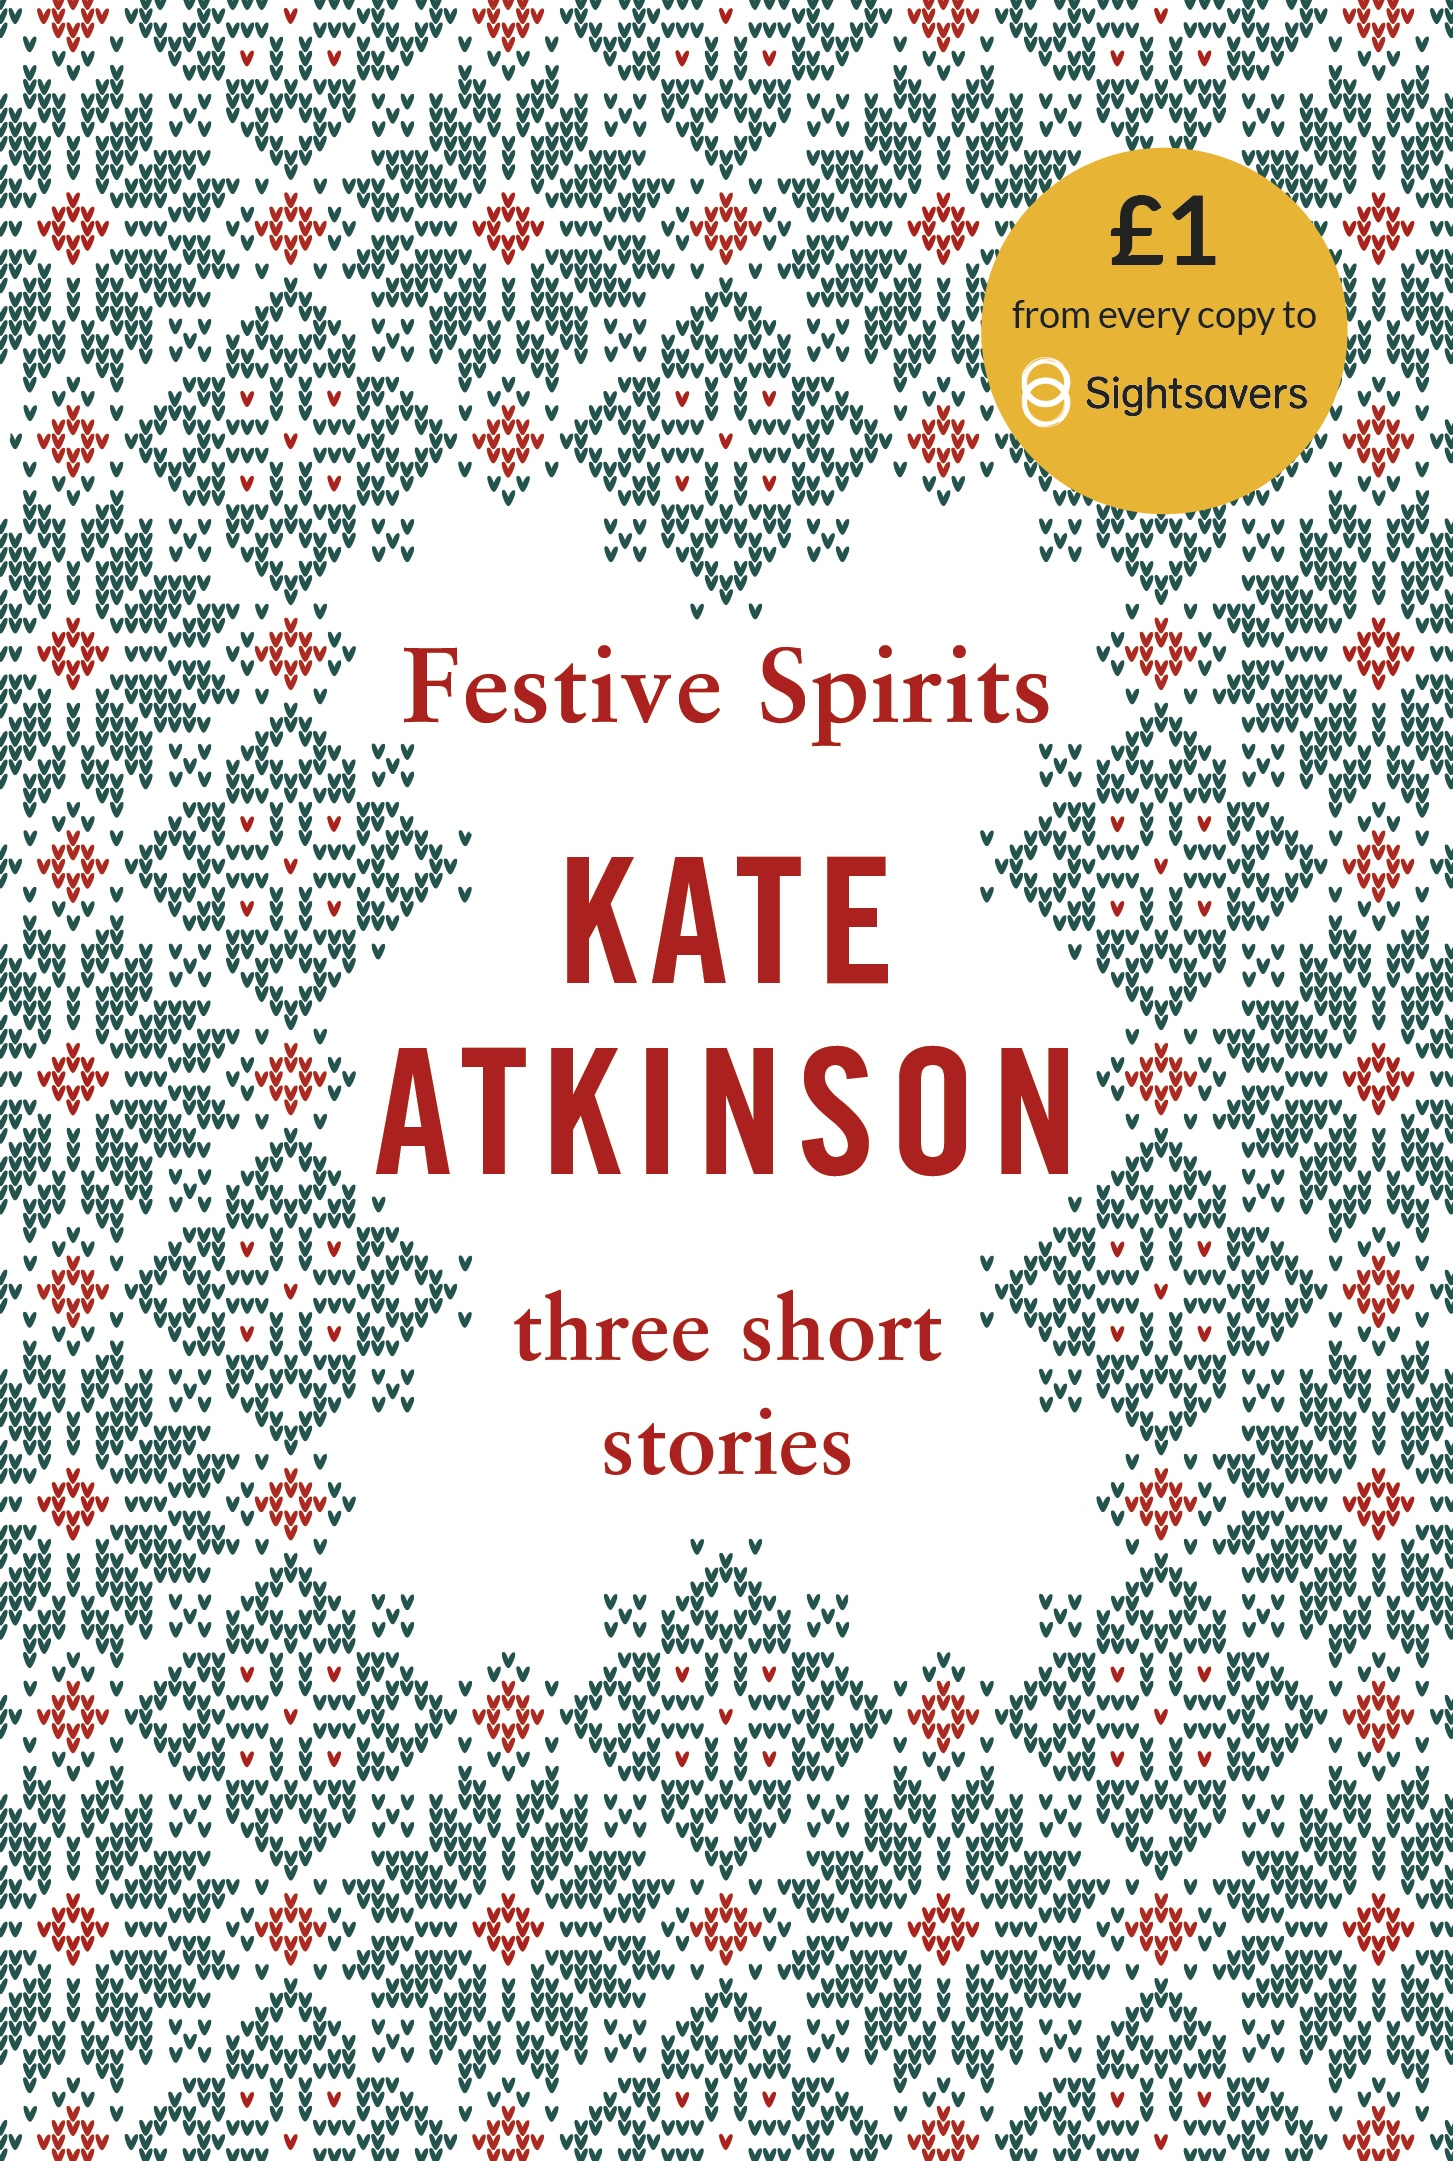 Book “Festive Spirits” by Kate Atkinson — October 3, 2019